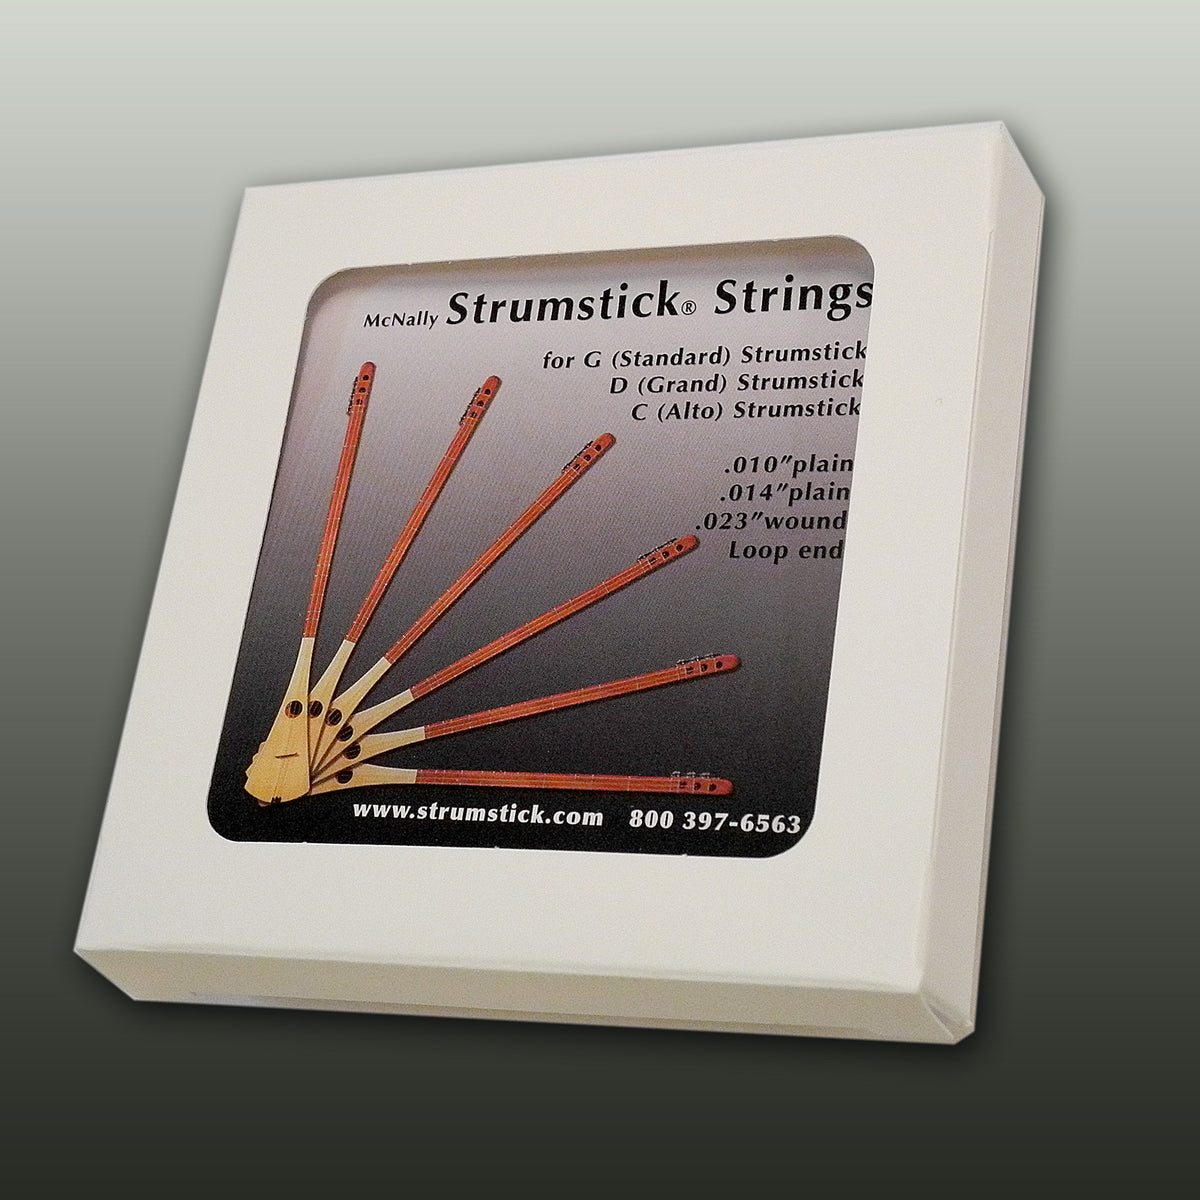 Strumstick Strings $10